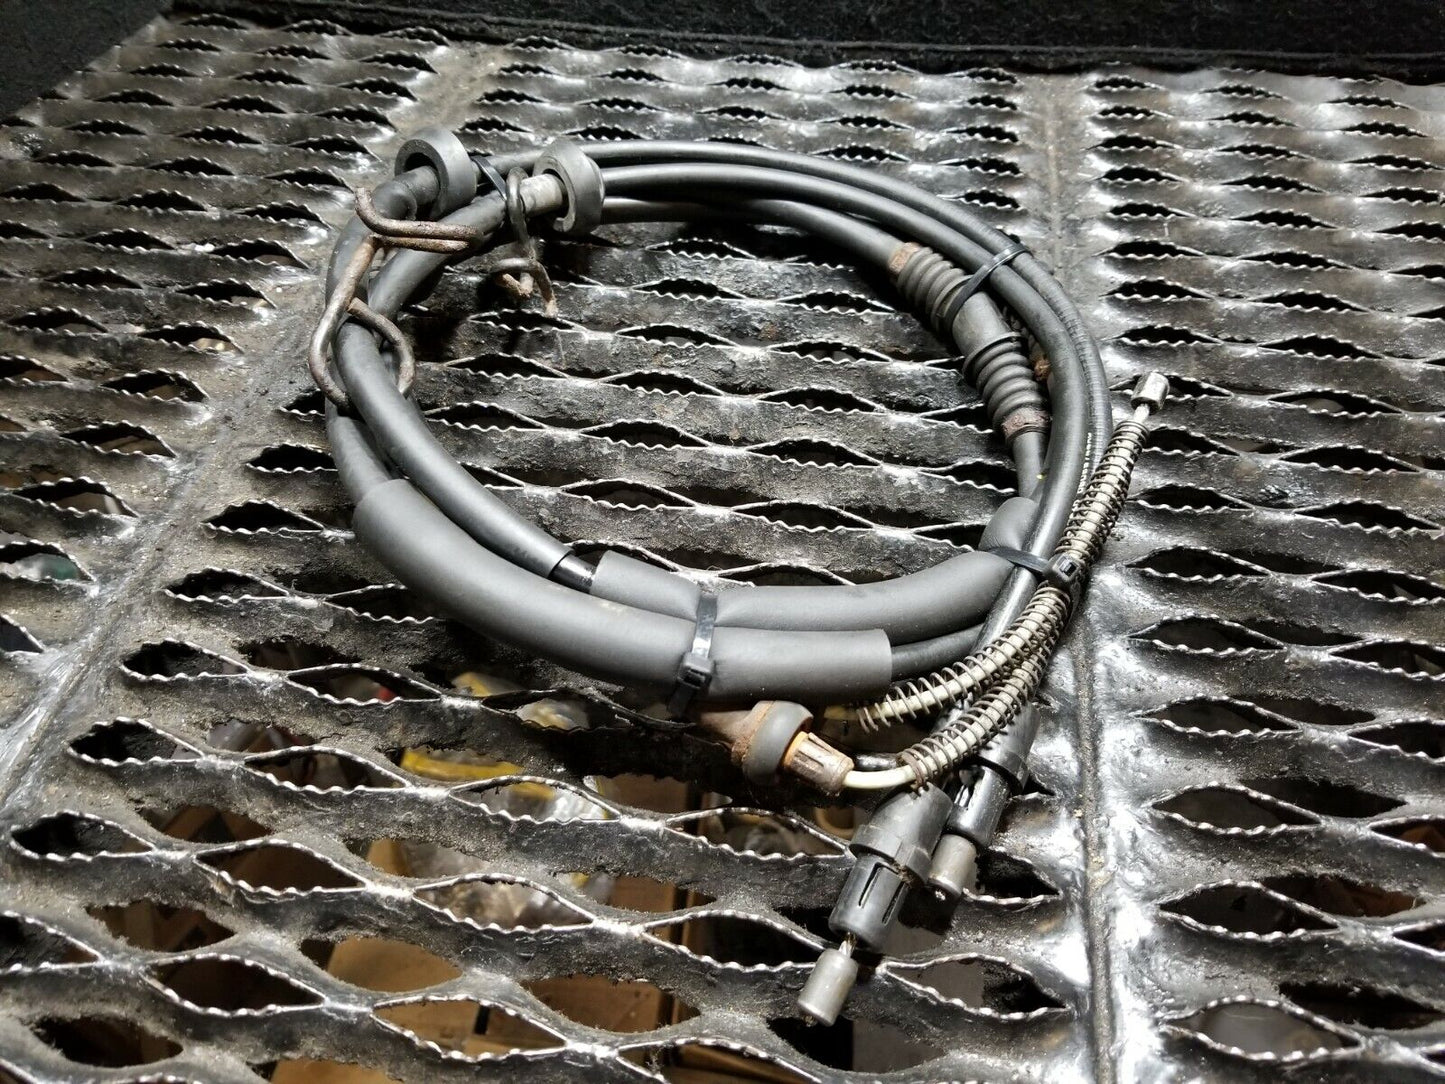 07 08 09 10 Chrysler Sebring Emergency Parking Brake Cable Pair OEM